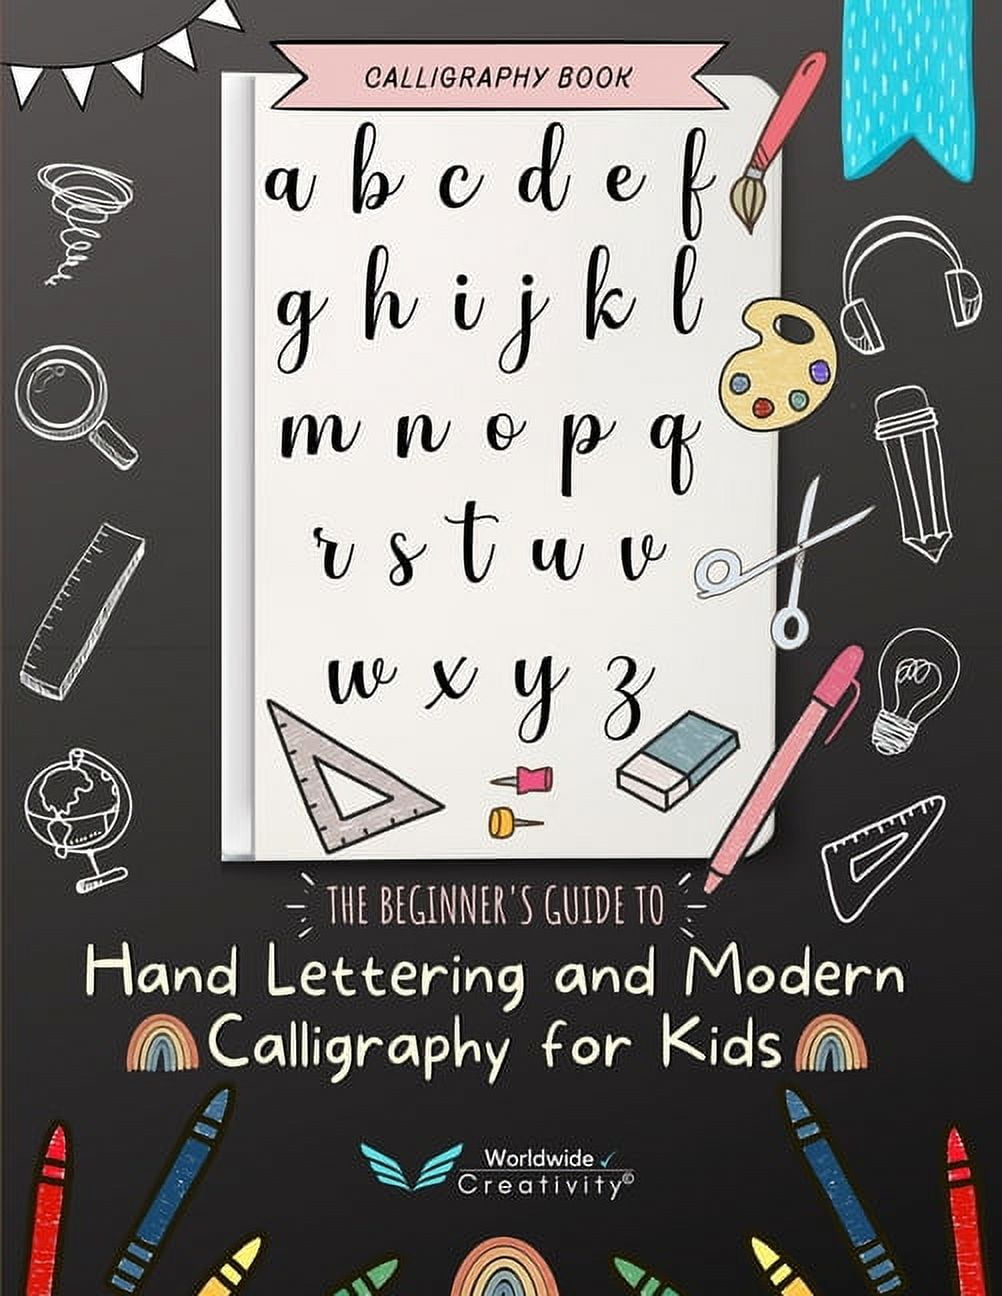 Kathleen Font Calligraphy Workbook - Calligraphy Instructions